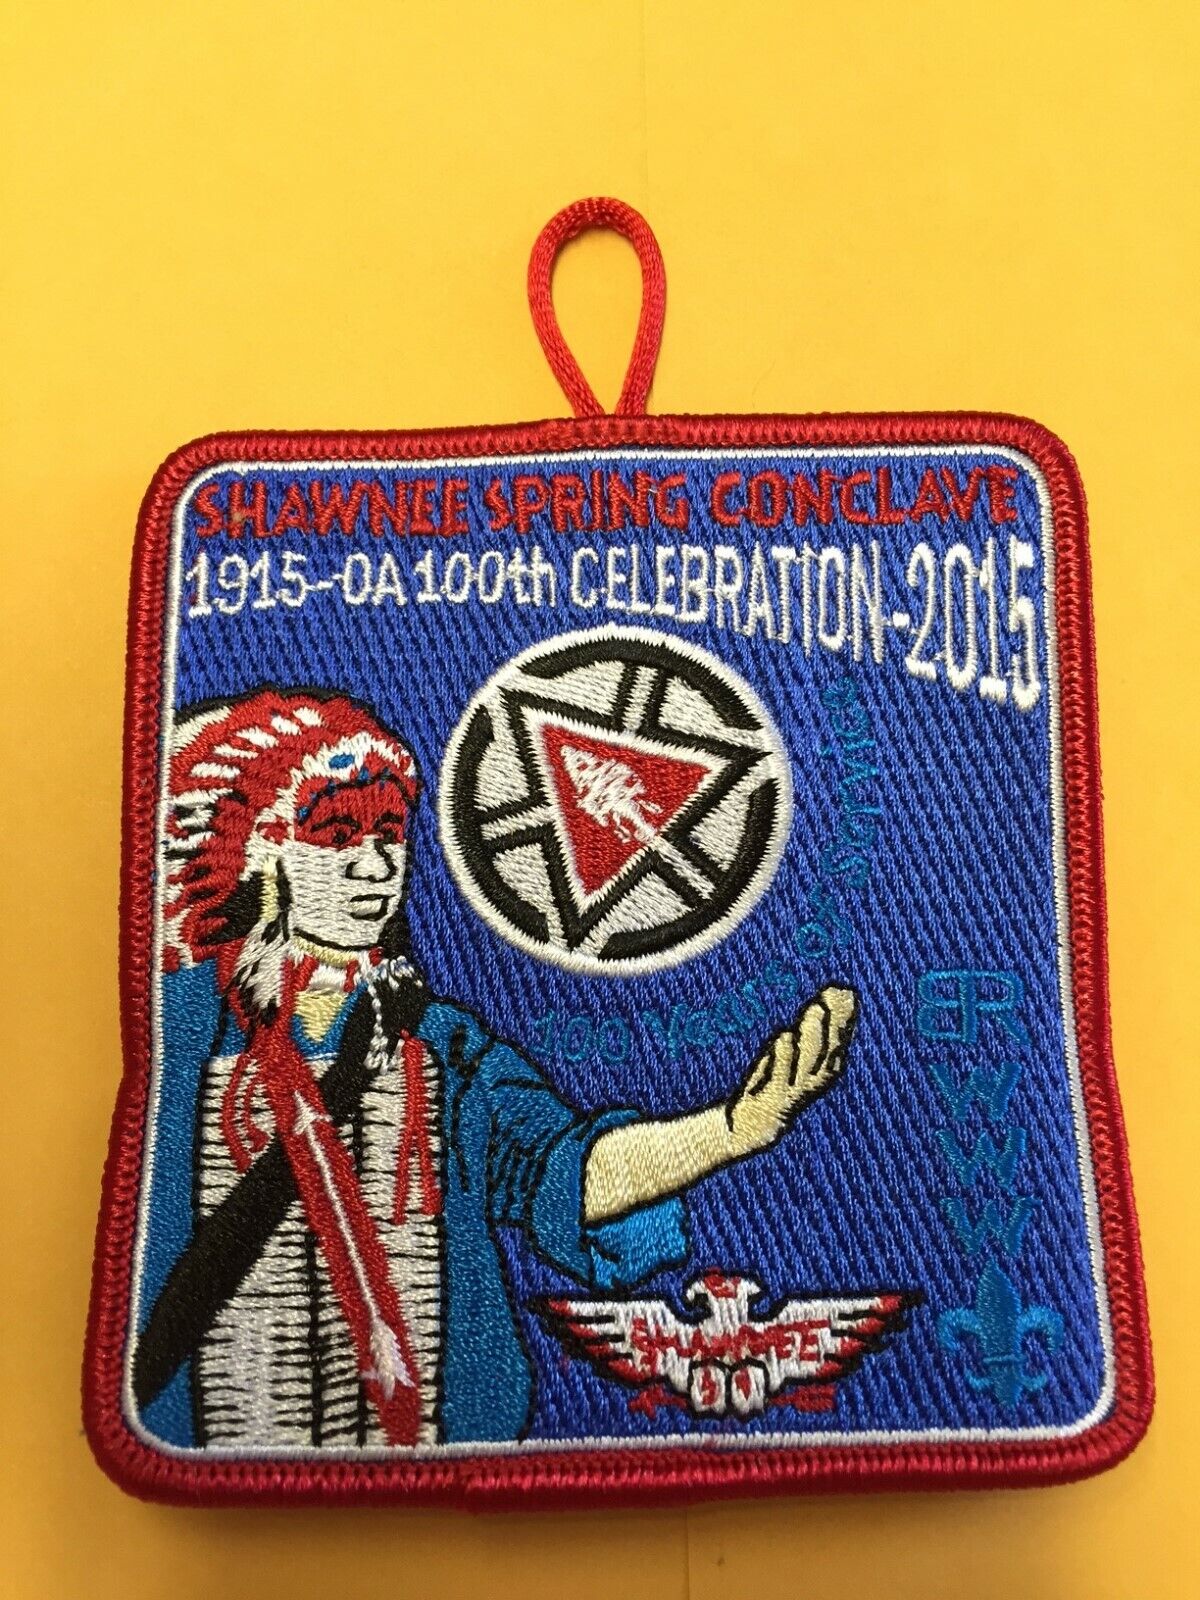 2015 Spring conclave OA 100, Shawnee 51 St. Louis council camps Boy Scouts